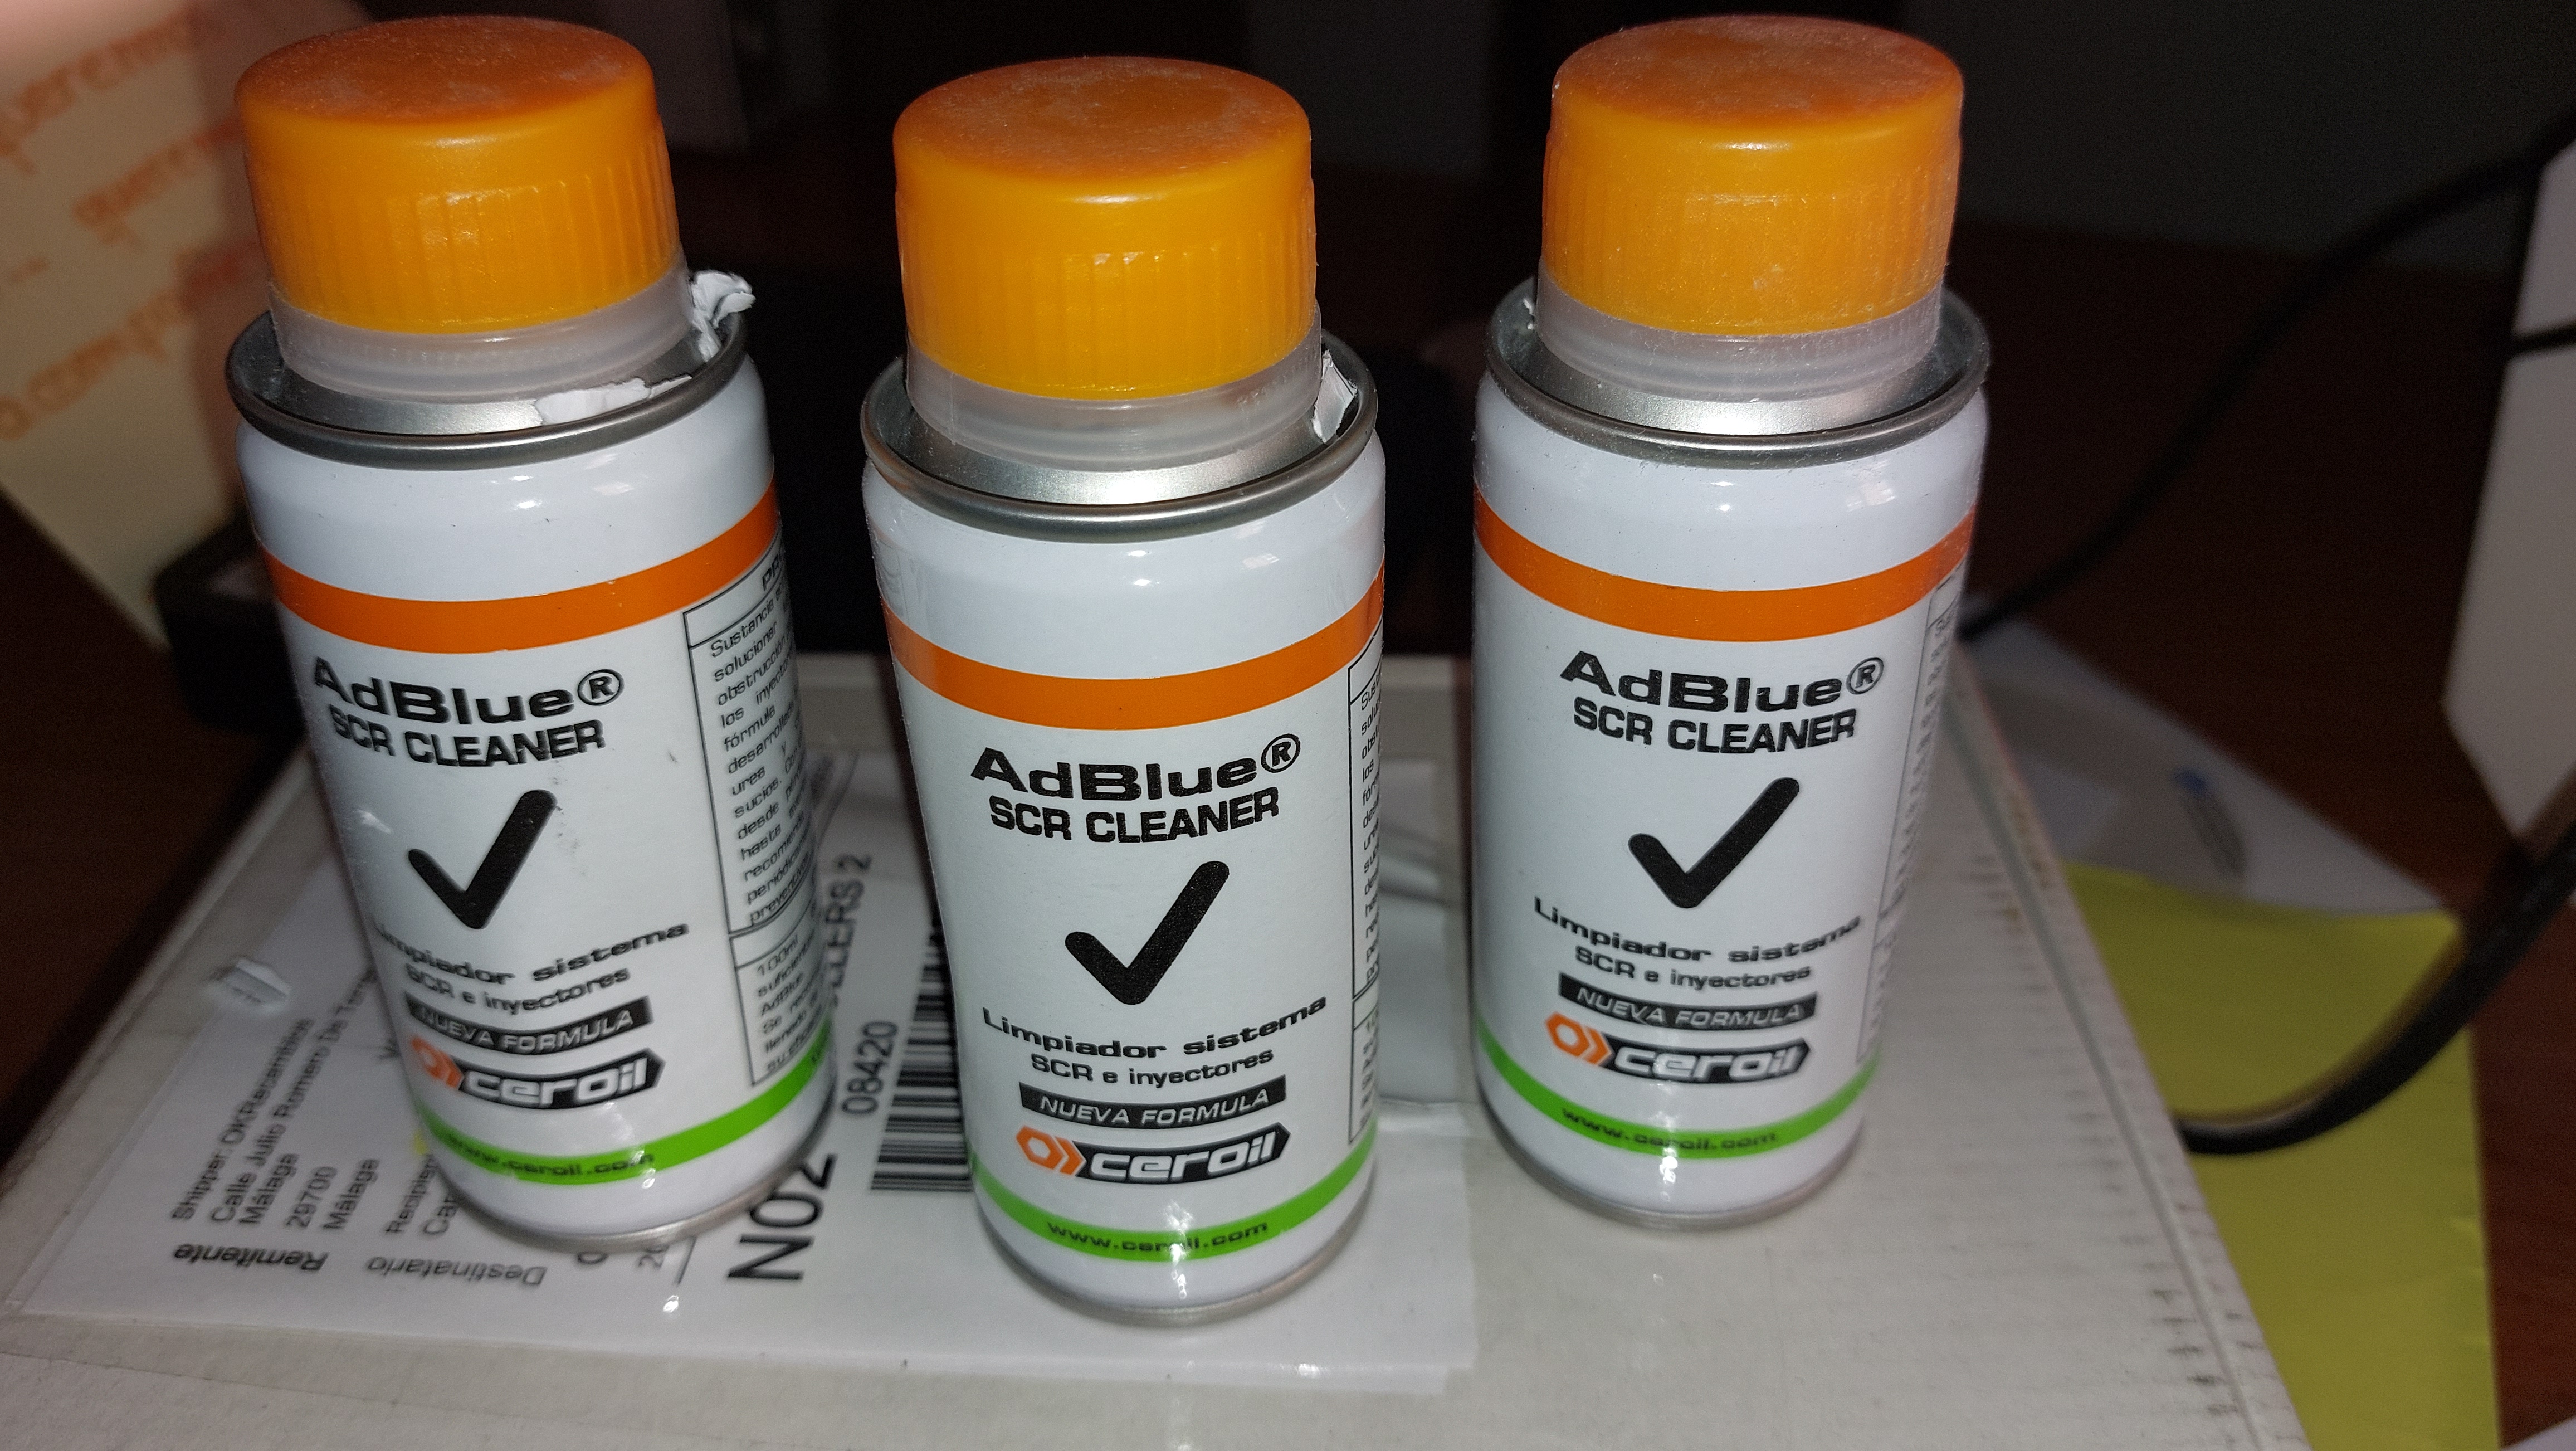 2 Ceroil Adblue Scr Cleaner 100 Ml Anticristalizante Adblue